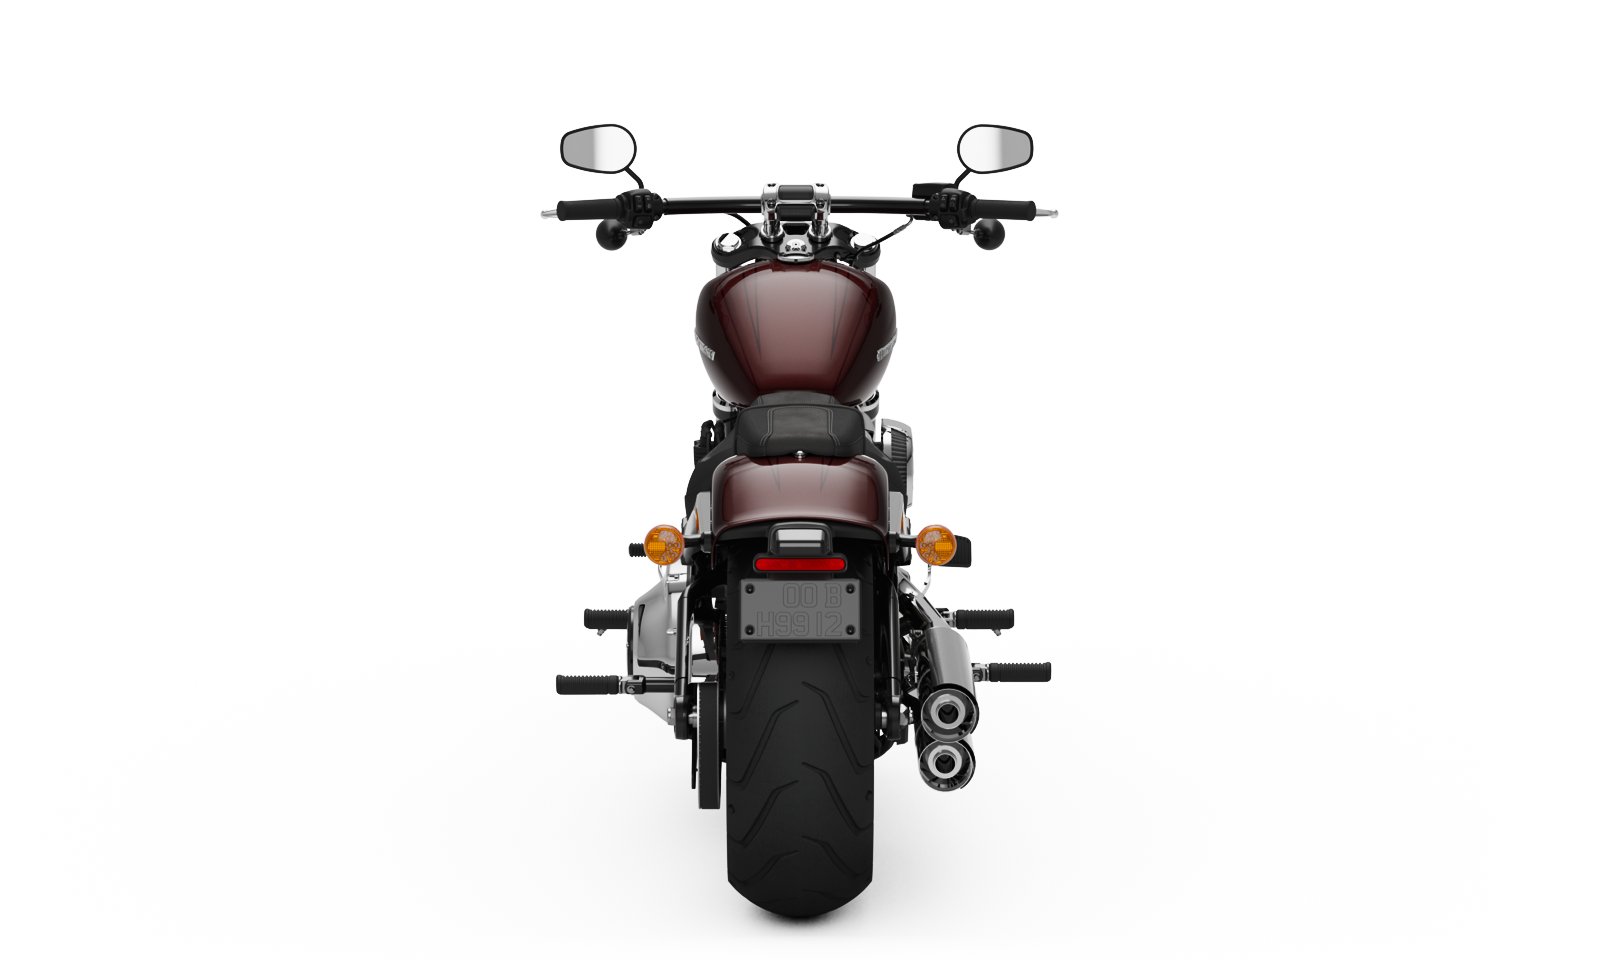 2021 Breakout Motorcycle Harley Davidson New Zealand